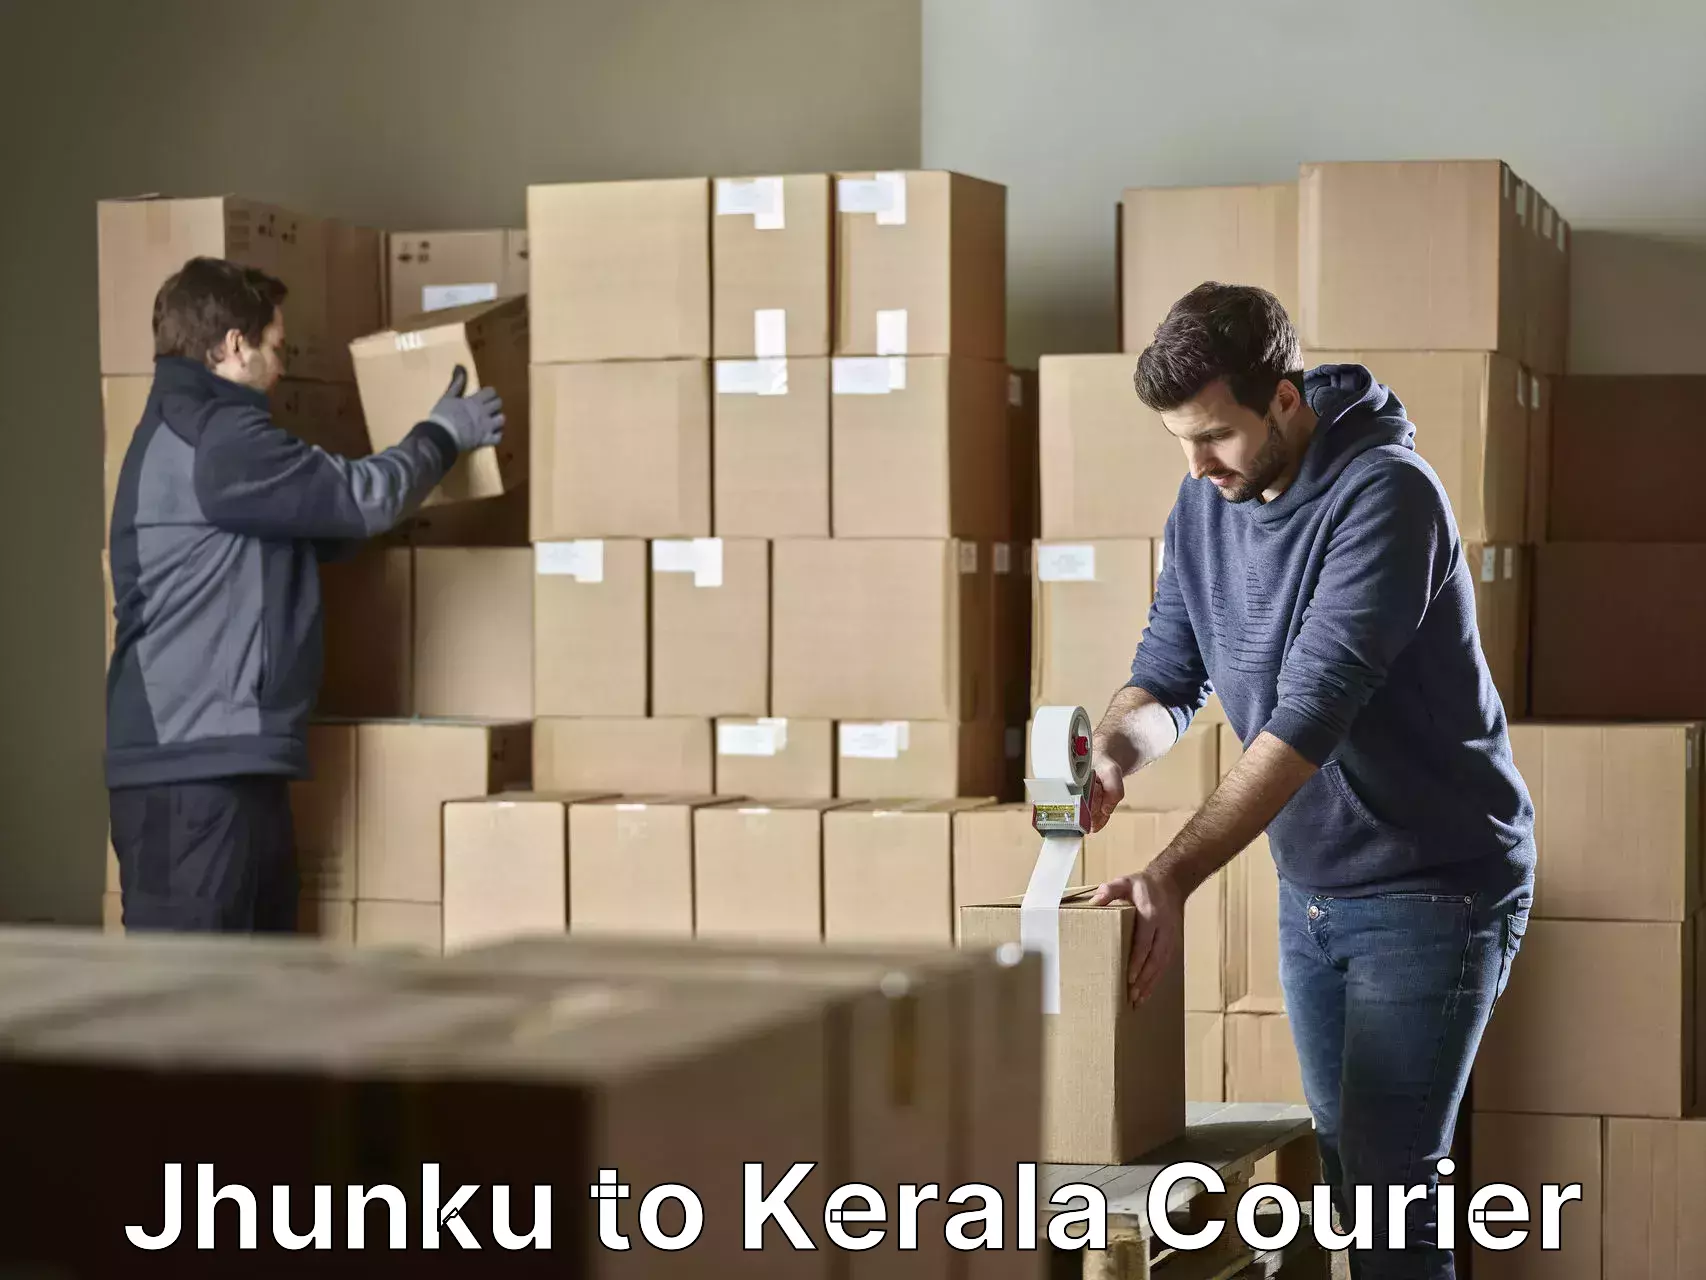 Efficient moving company Jhunku to Punalur